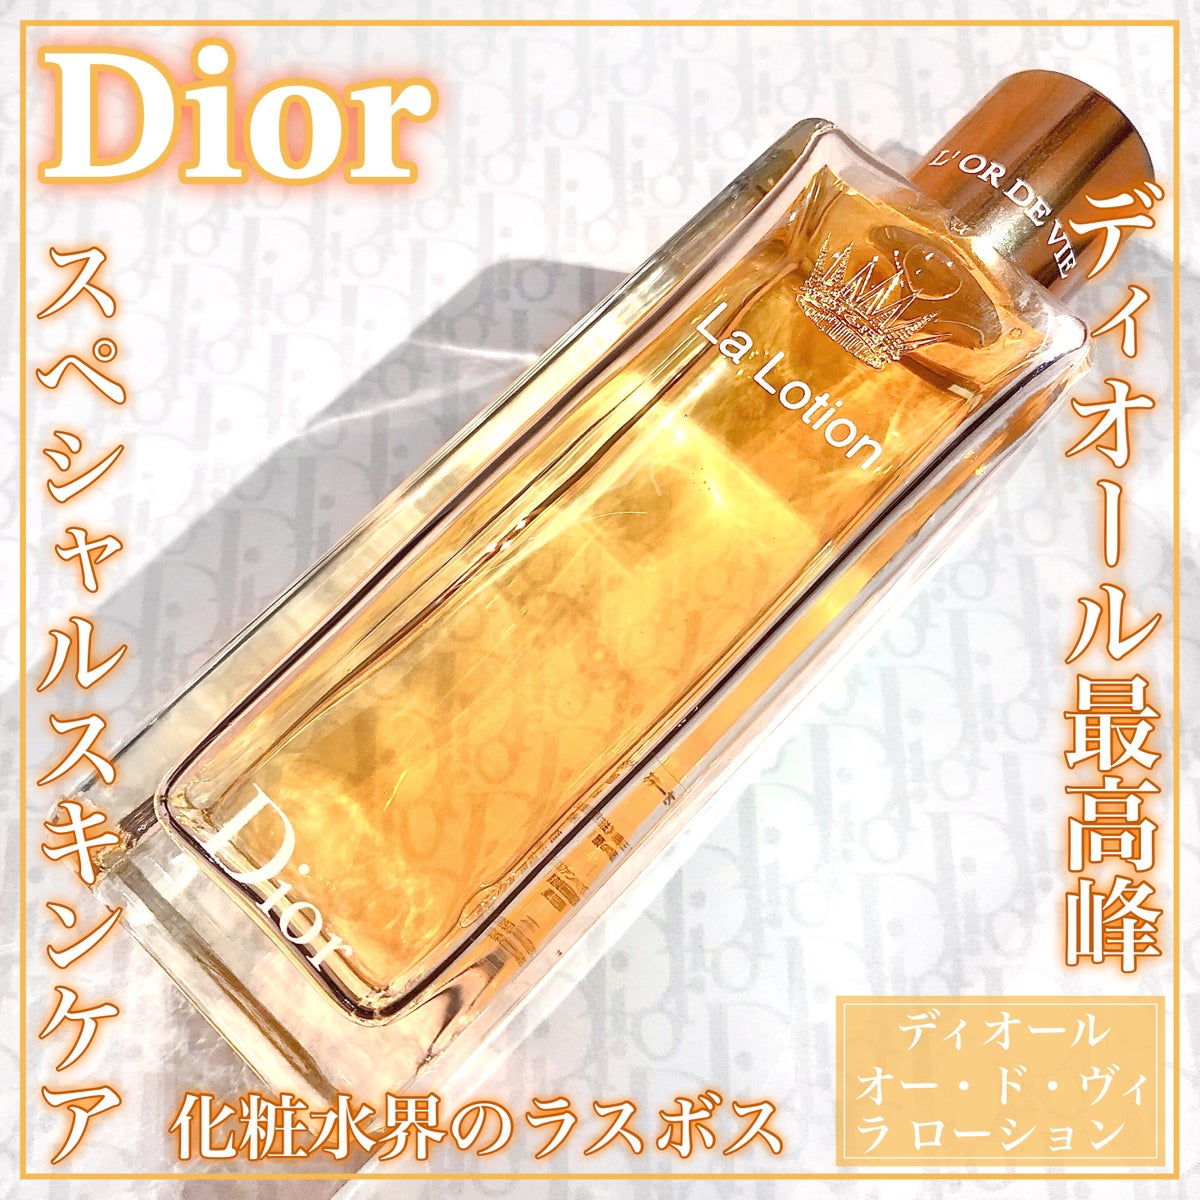 Diorオードヴィラローション180ml - starrvybzonline.com